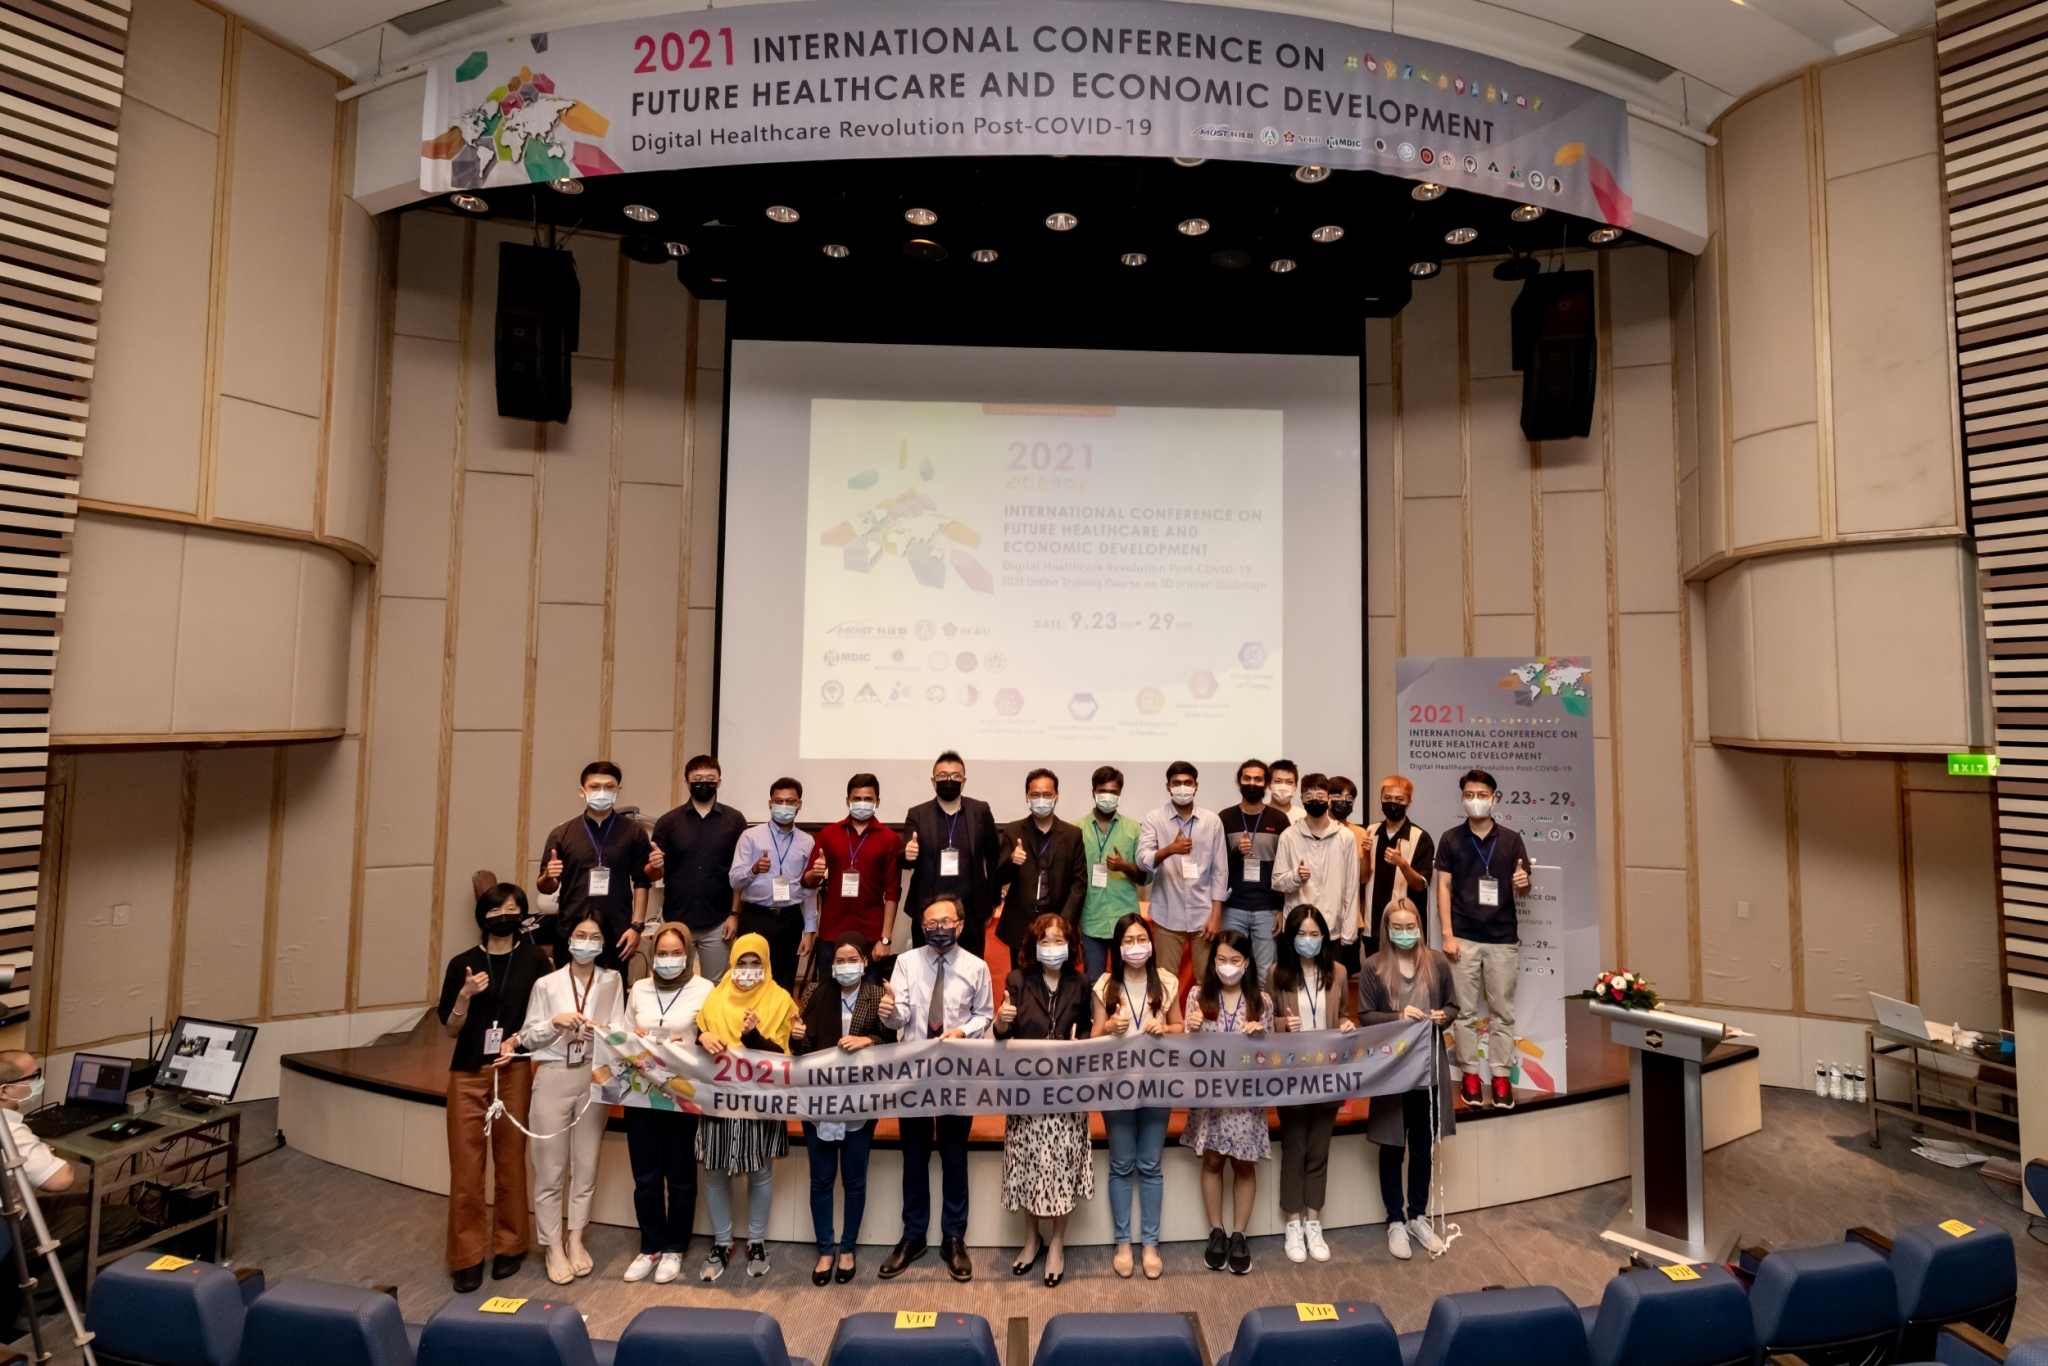 2021 International Conference on Future Healthcare and Economic Development, Digital Healthcare Revolution Post-COVID-19's pic